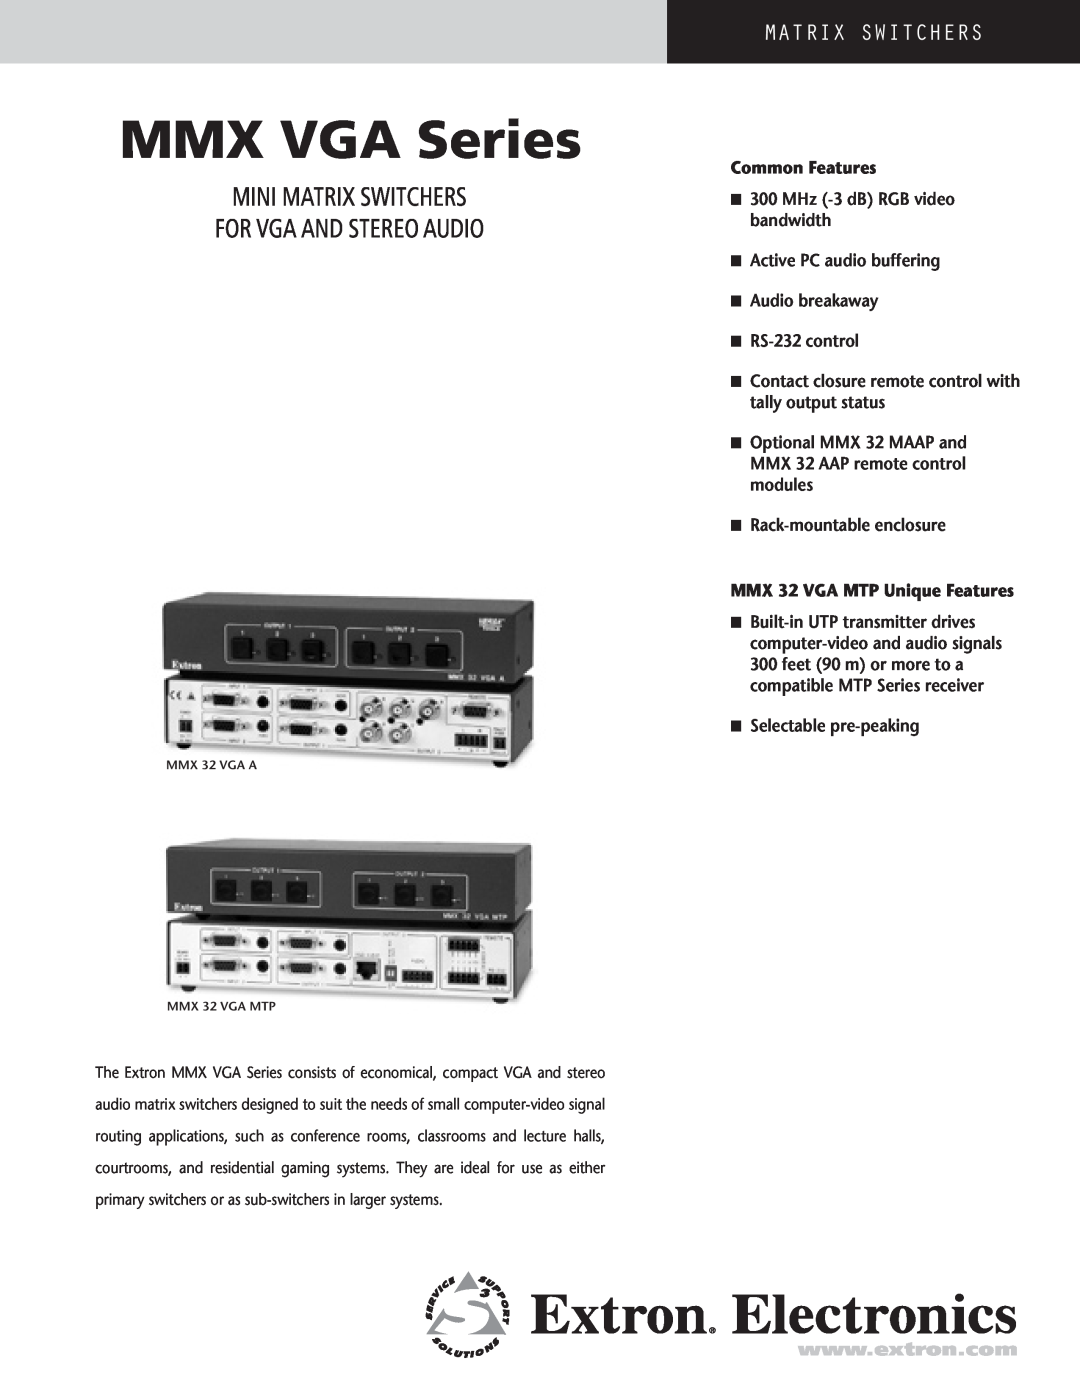 Extron electronic MMX VGA Series manual Mini Matrix Switchers For Vga And Stereo Audio 